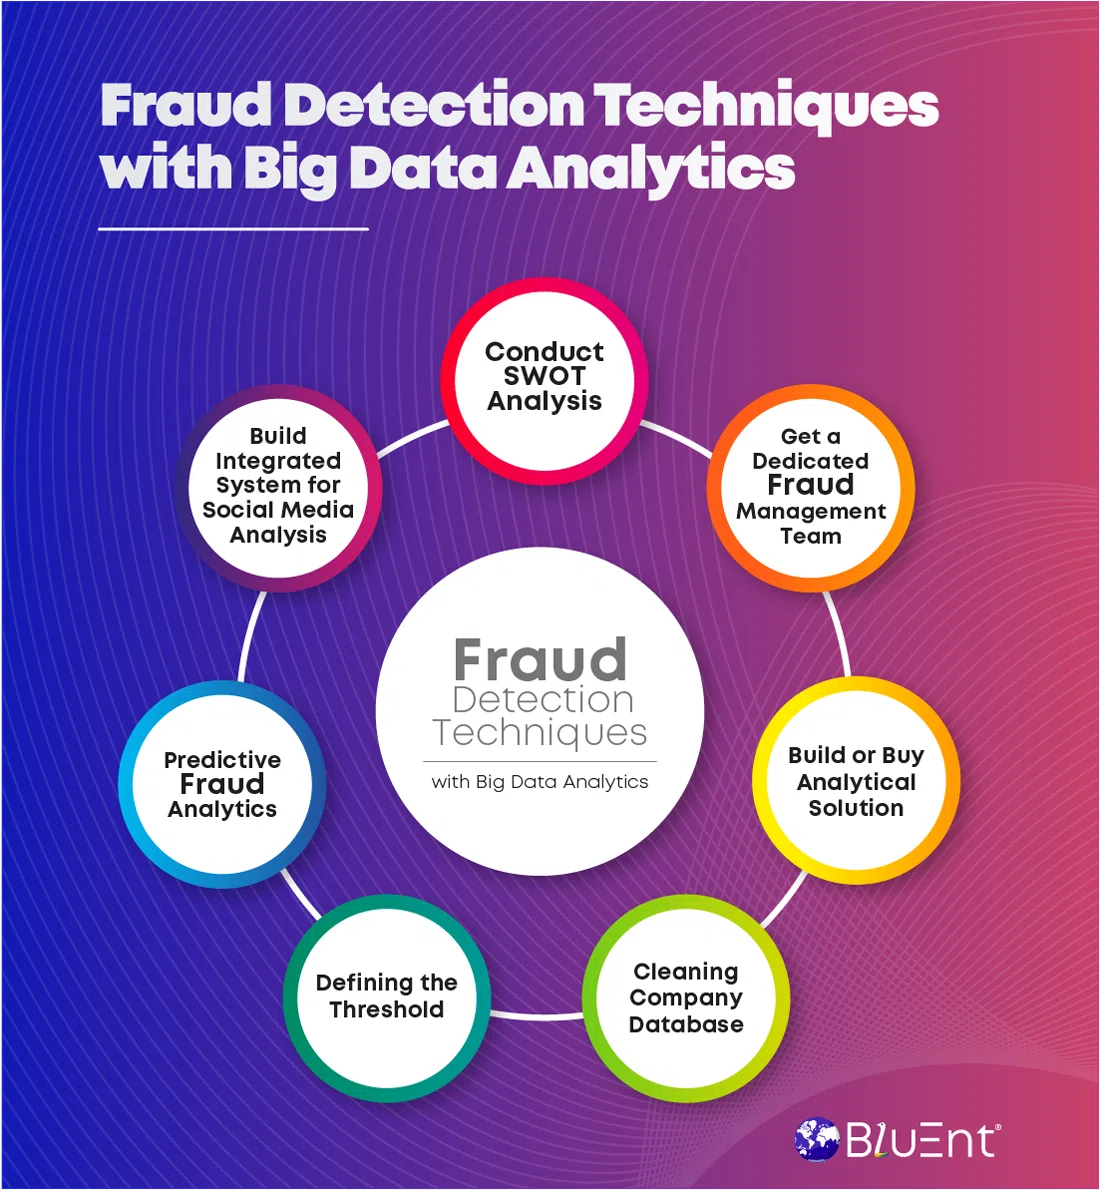 Fraud data analytics methods to detect and mitigate frauds